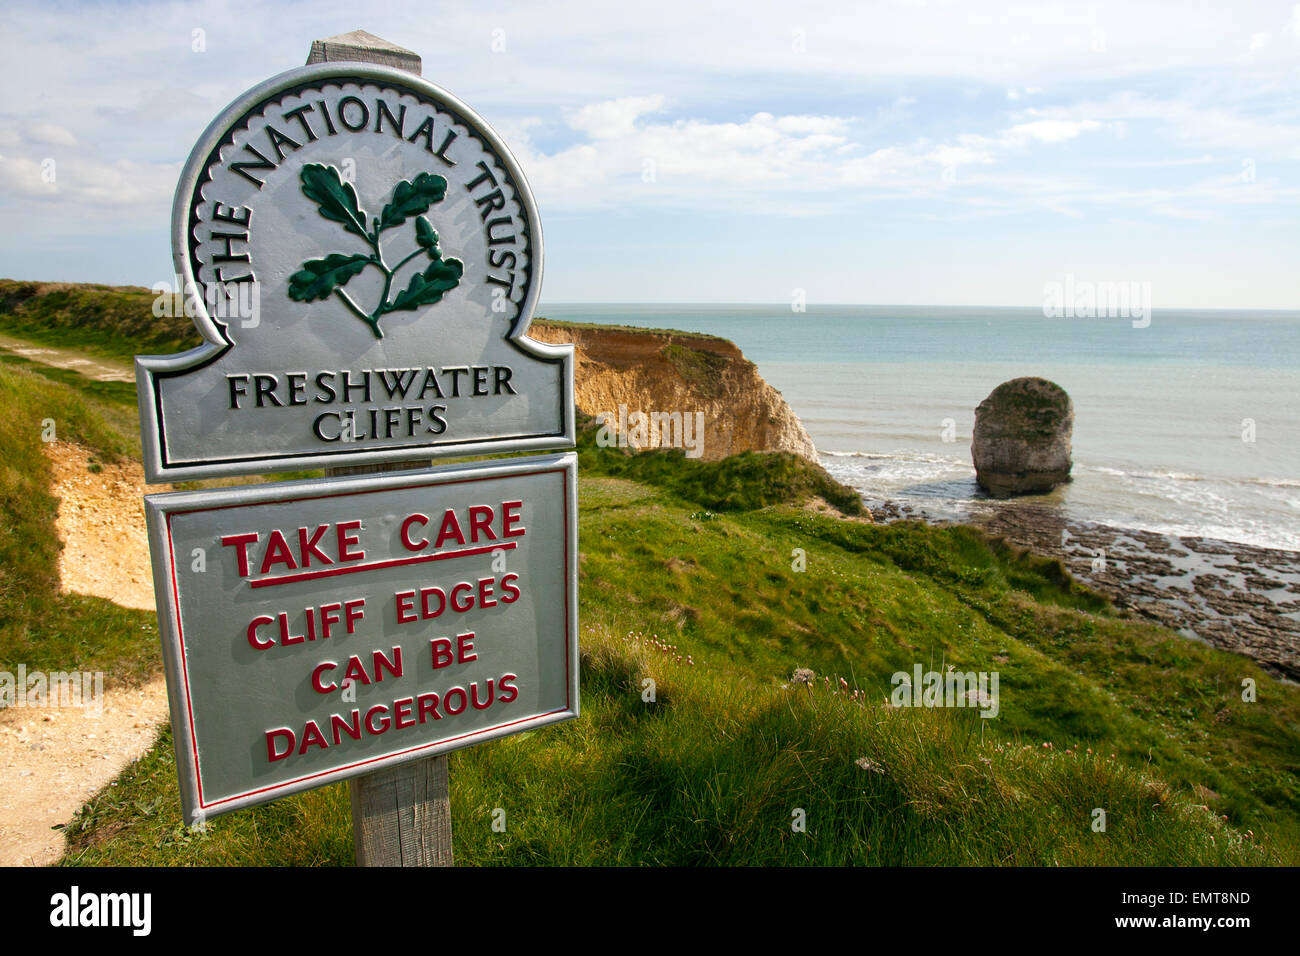 Nation Trust, sign, warning of cliff edges, Freshwater Bay, Isle of Wight, England, Uk, Stock Photo